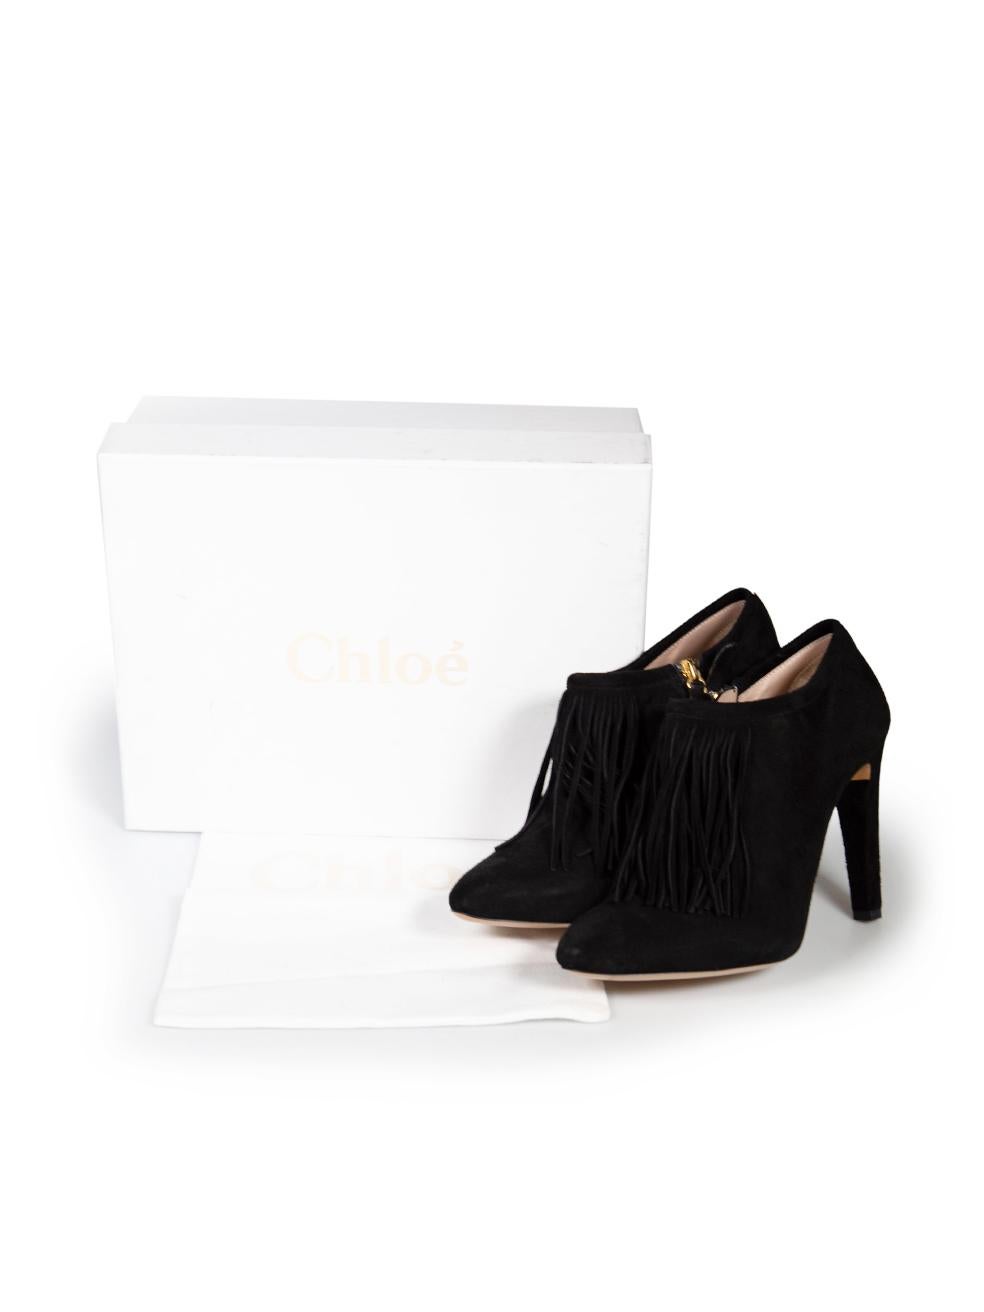 Chloé Black Suede Fringe Trim Ankle Boots Size IT 38.5 For Sale 1